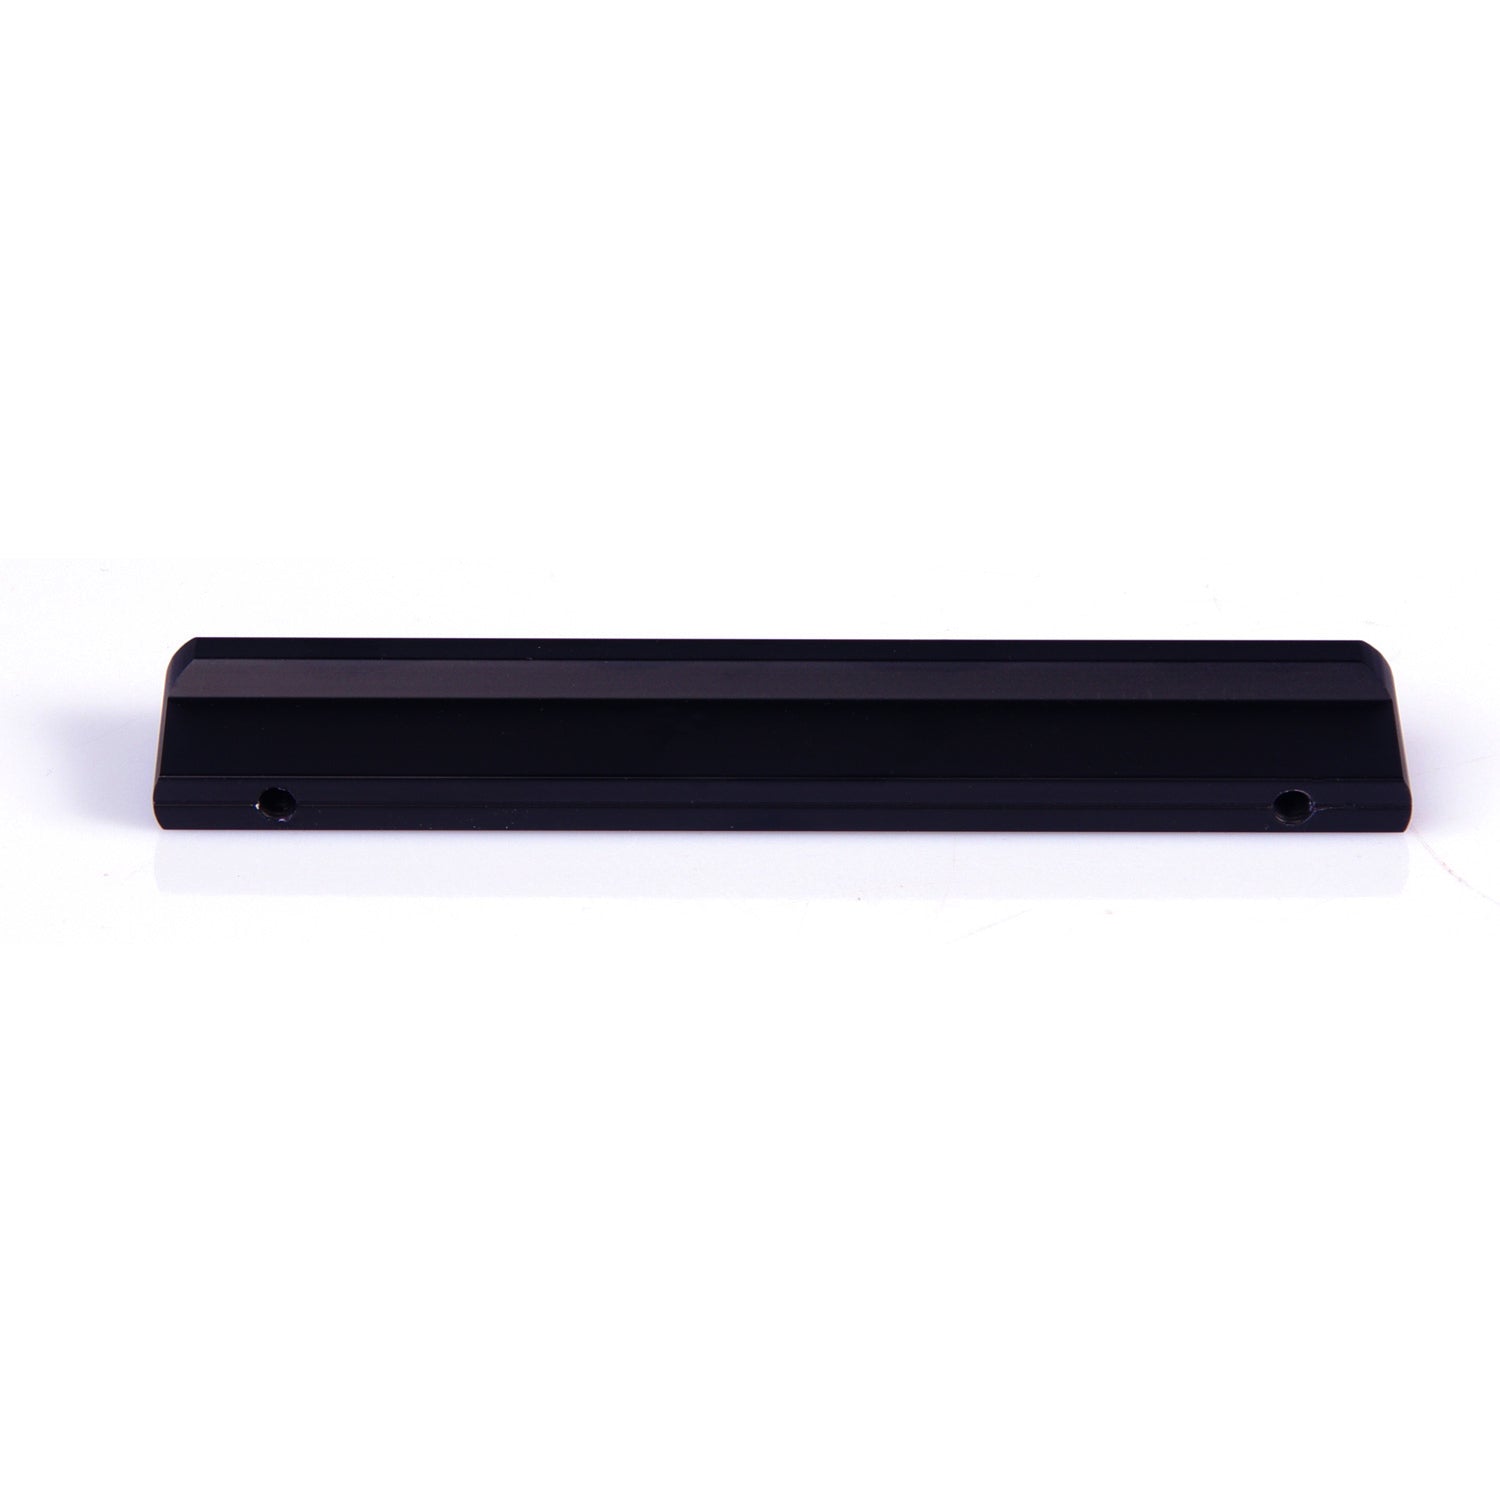 Solid Zinc Furniture Kitchen Bathroom Cabinet Handles Drawer Bar Handle Pull Knob Black 96mm Deals499